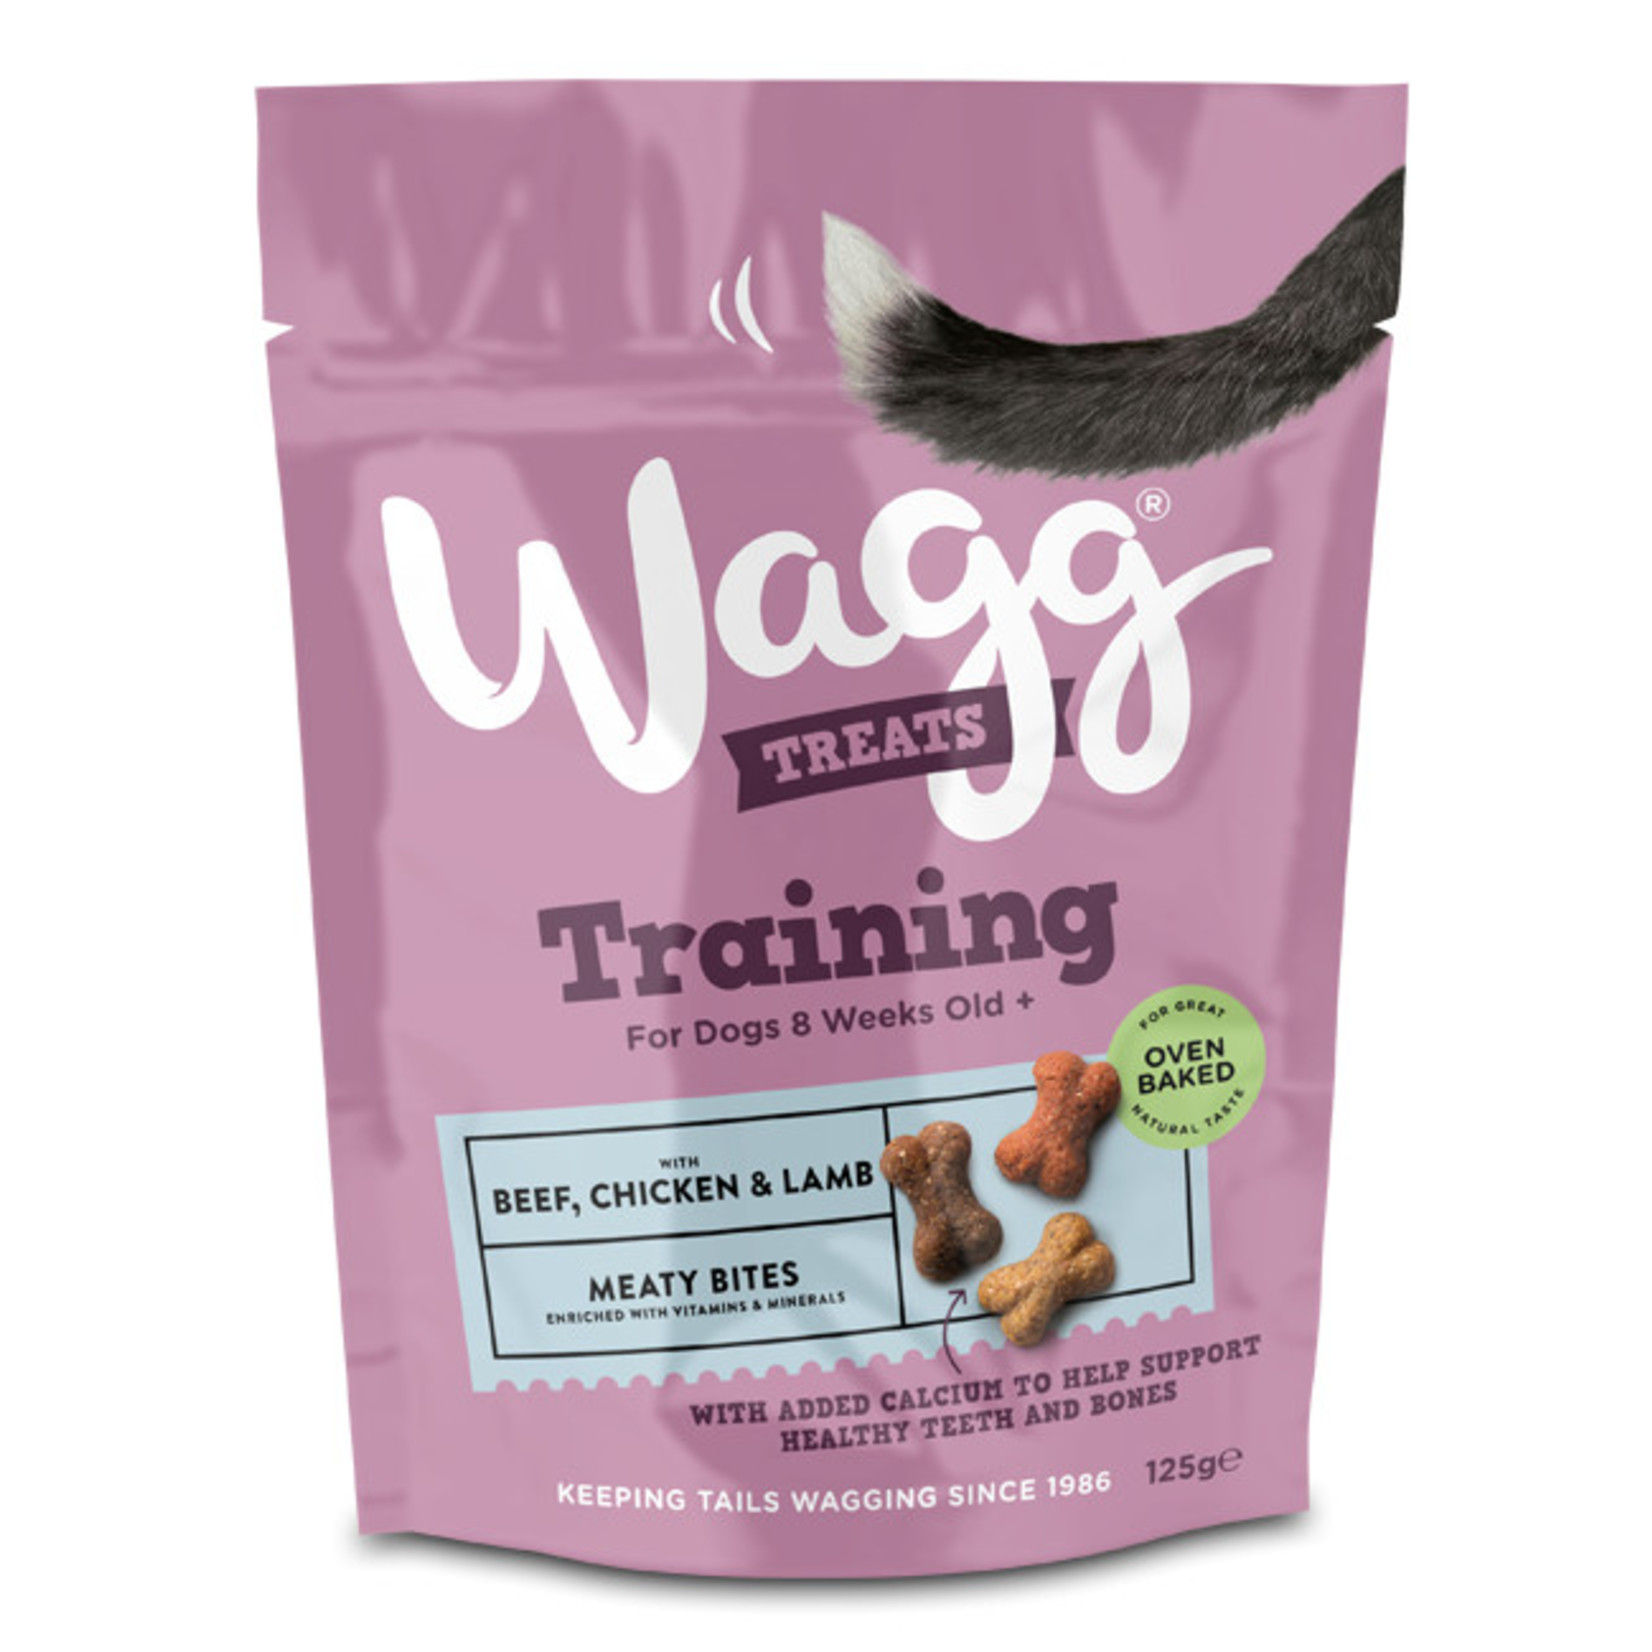 Wagg Beef, Chicken & Lamb Meaty Bites Dog Training Treats, 125g